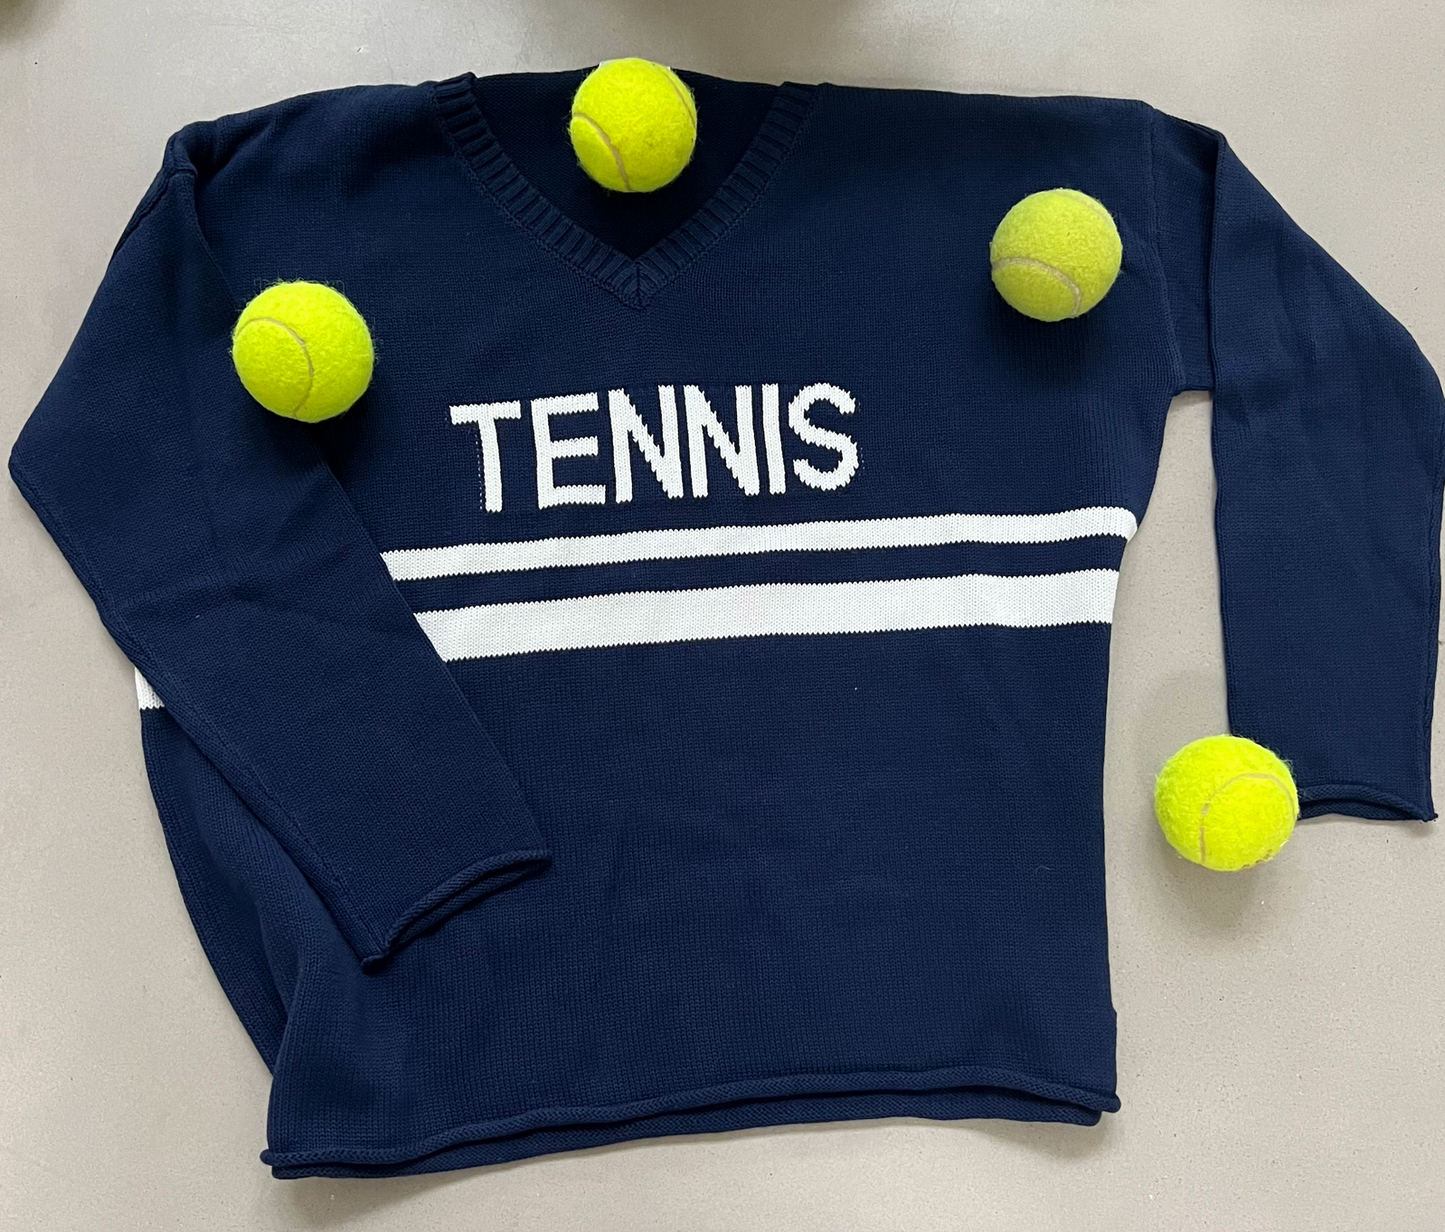 TENNIS - Navy sweater